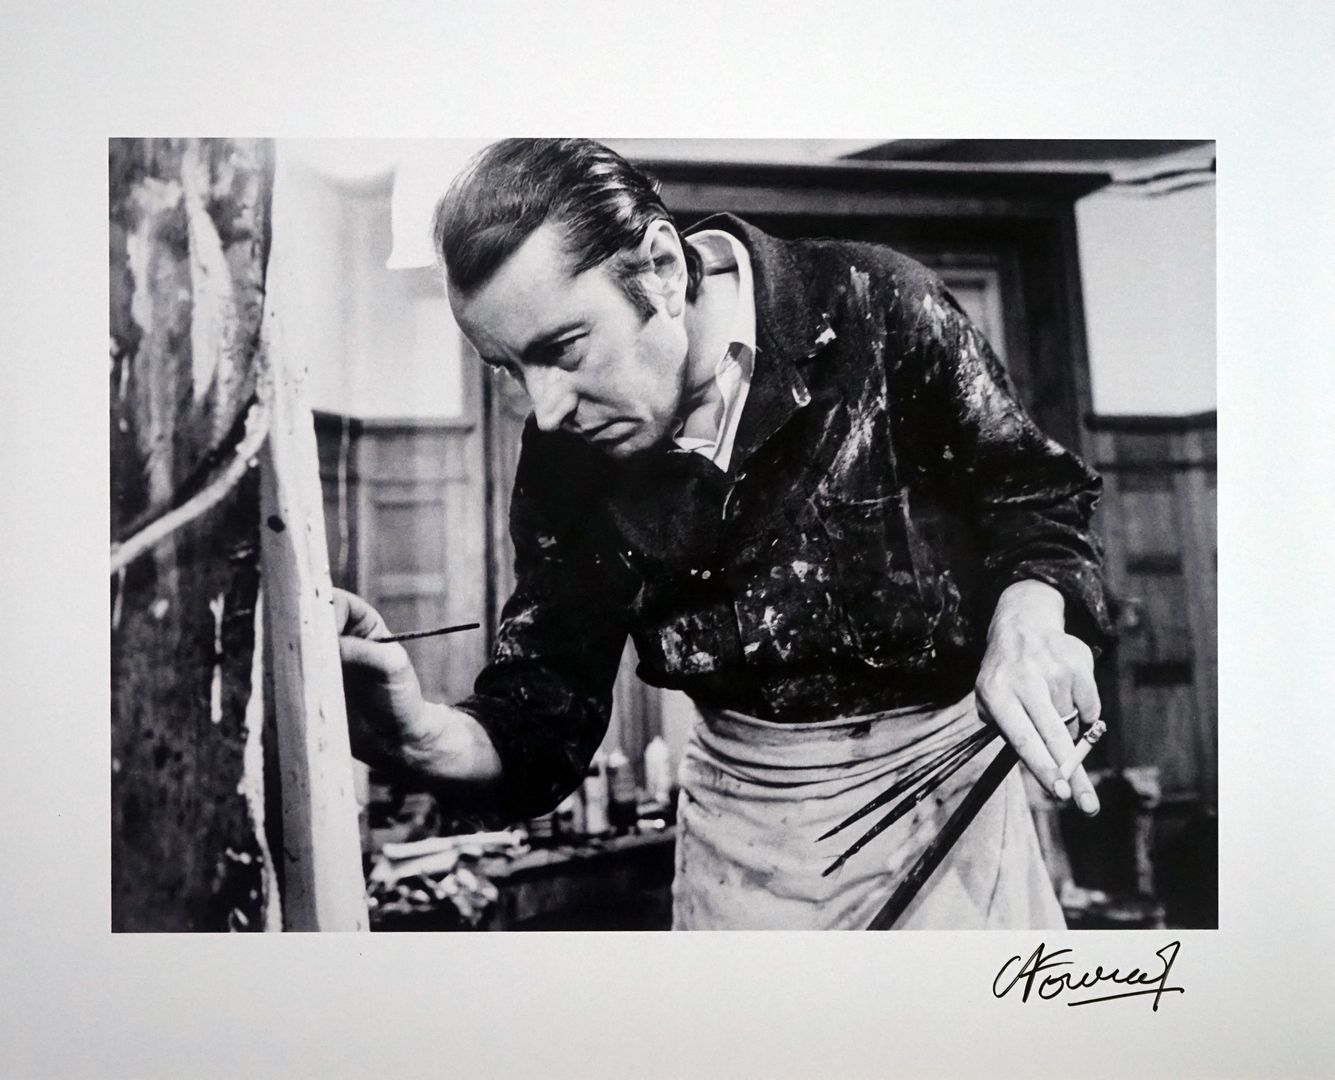 Null 伯纳德-巴菲特在他的工作室 1959年

印在富士胶片纸上，作者在图像下用黑色墨水签名

39 x 49 厘米